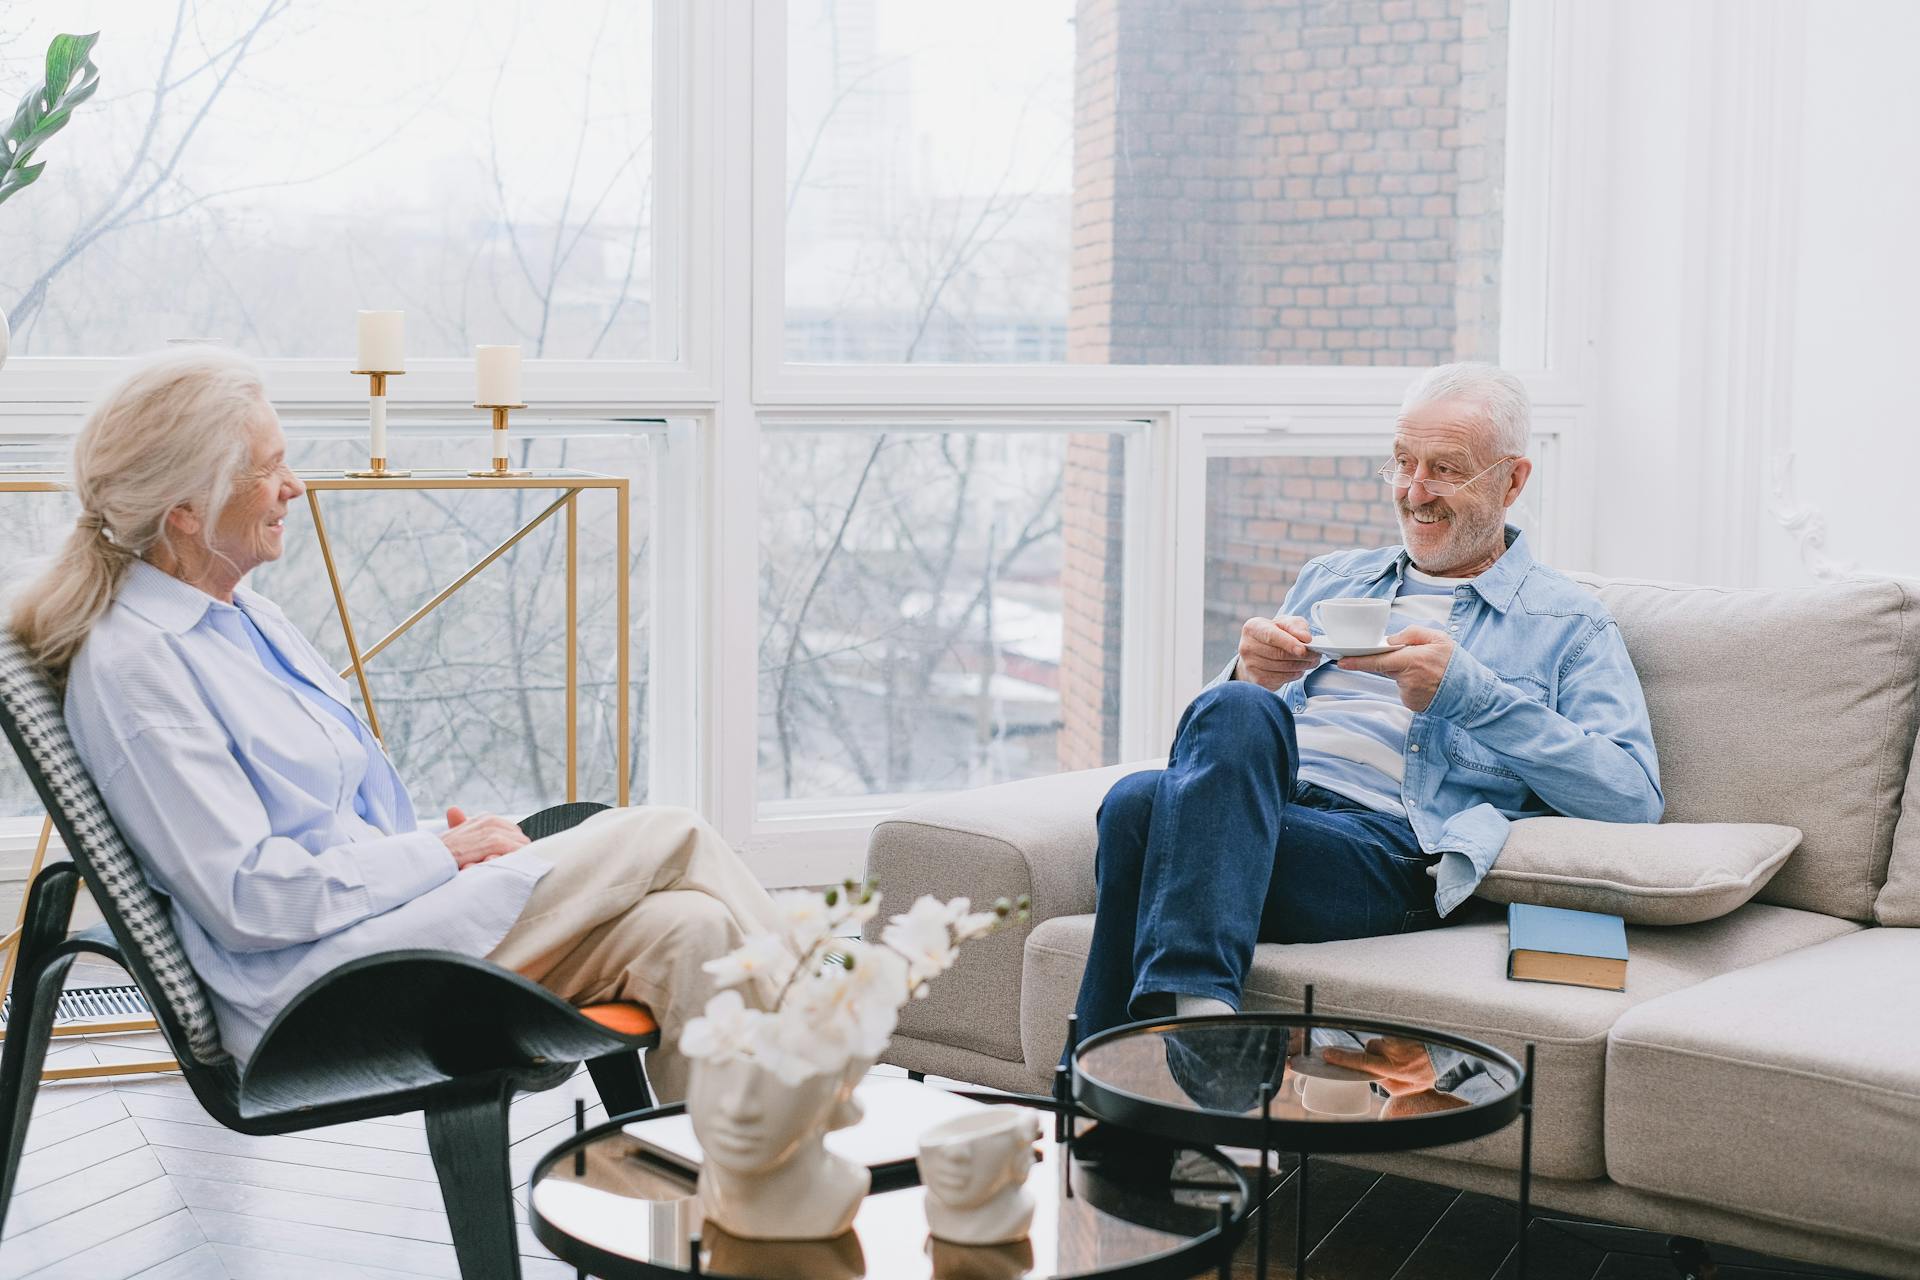 An elderly couple talking | Source: Pexels